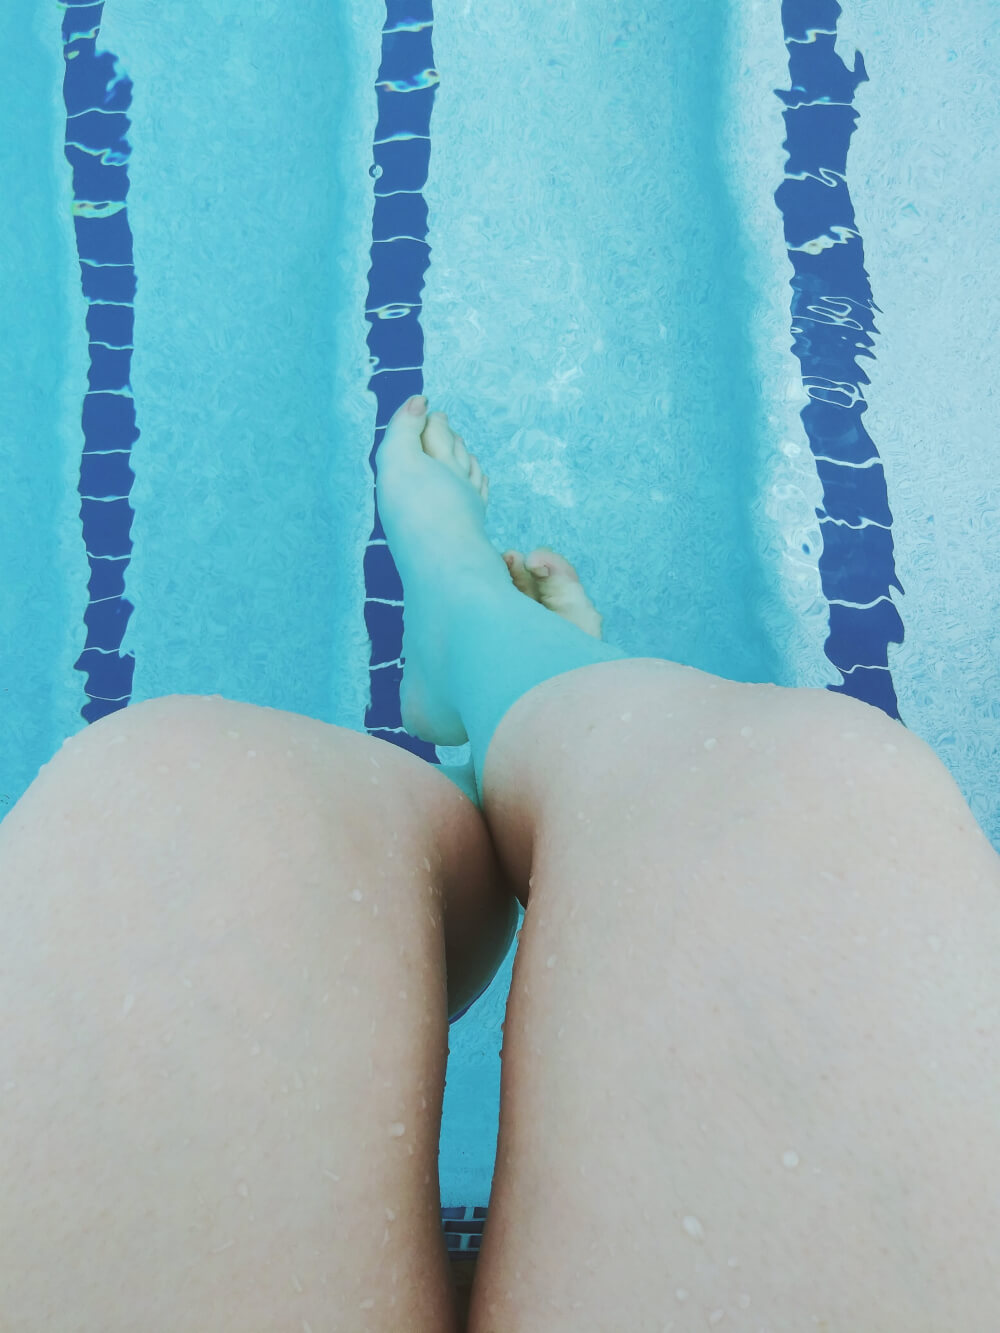 Caucasion thighs outside pool; feet inside pool